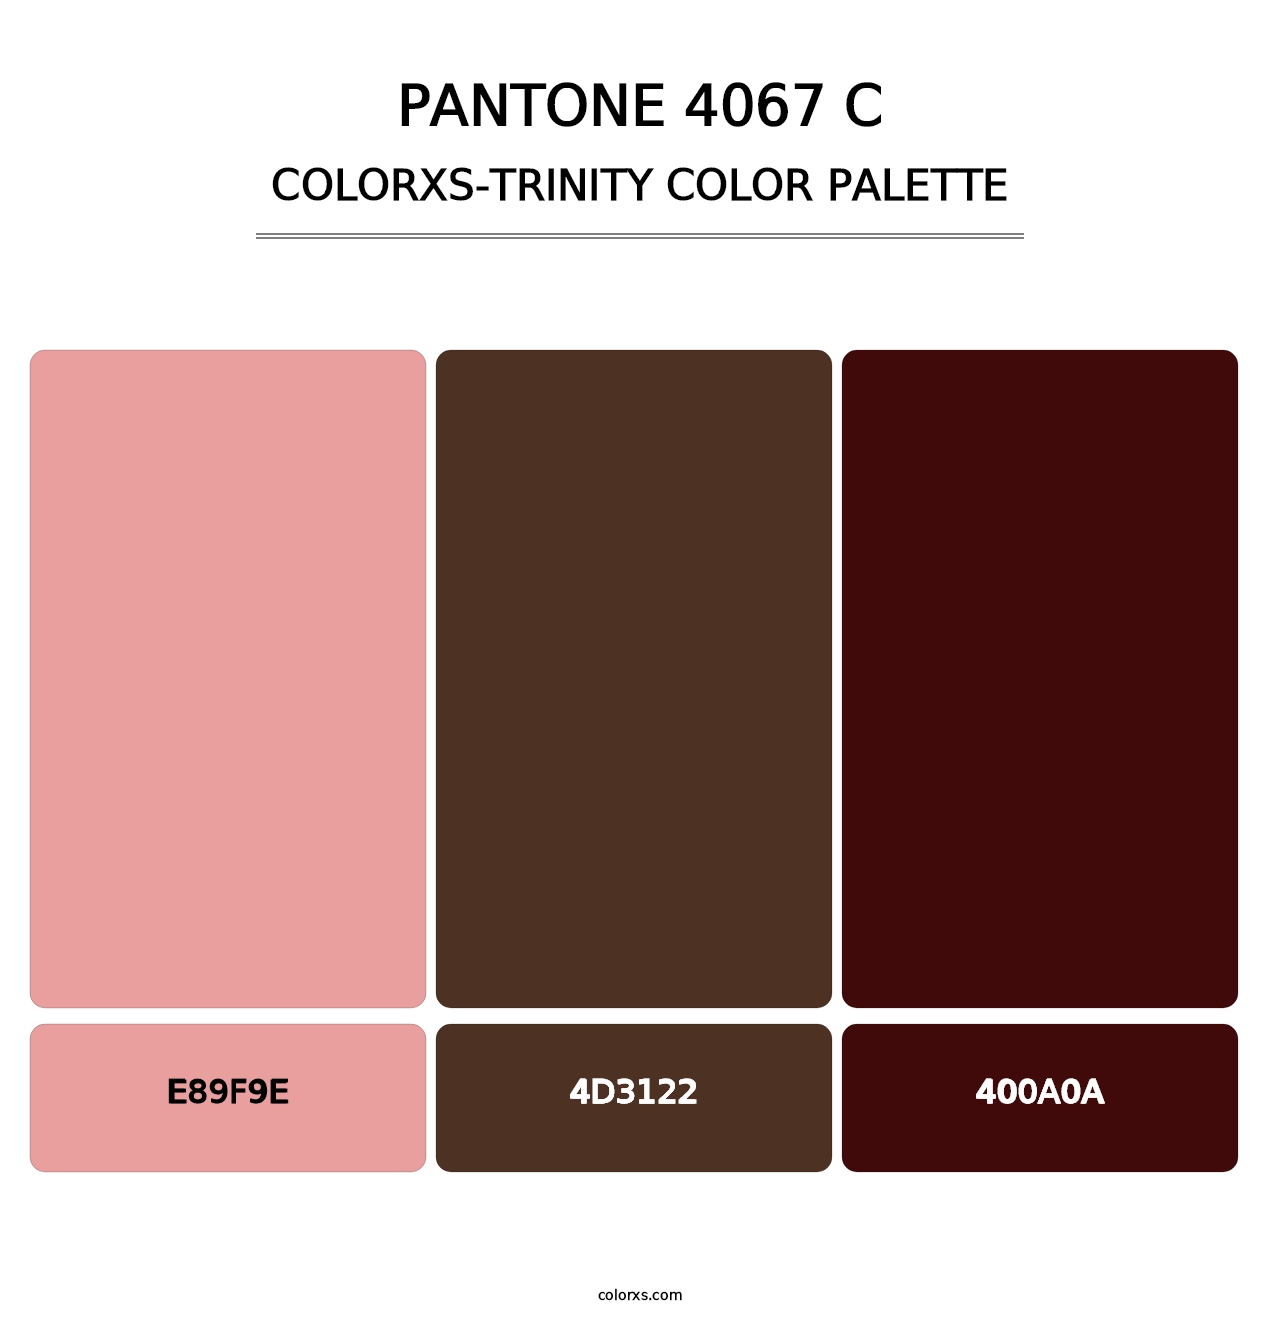 PANTONE 4067 C - Colorxs Trinity Palette